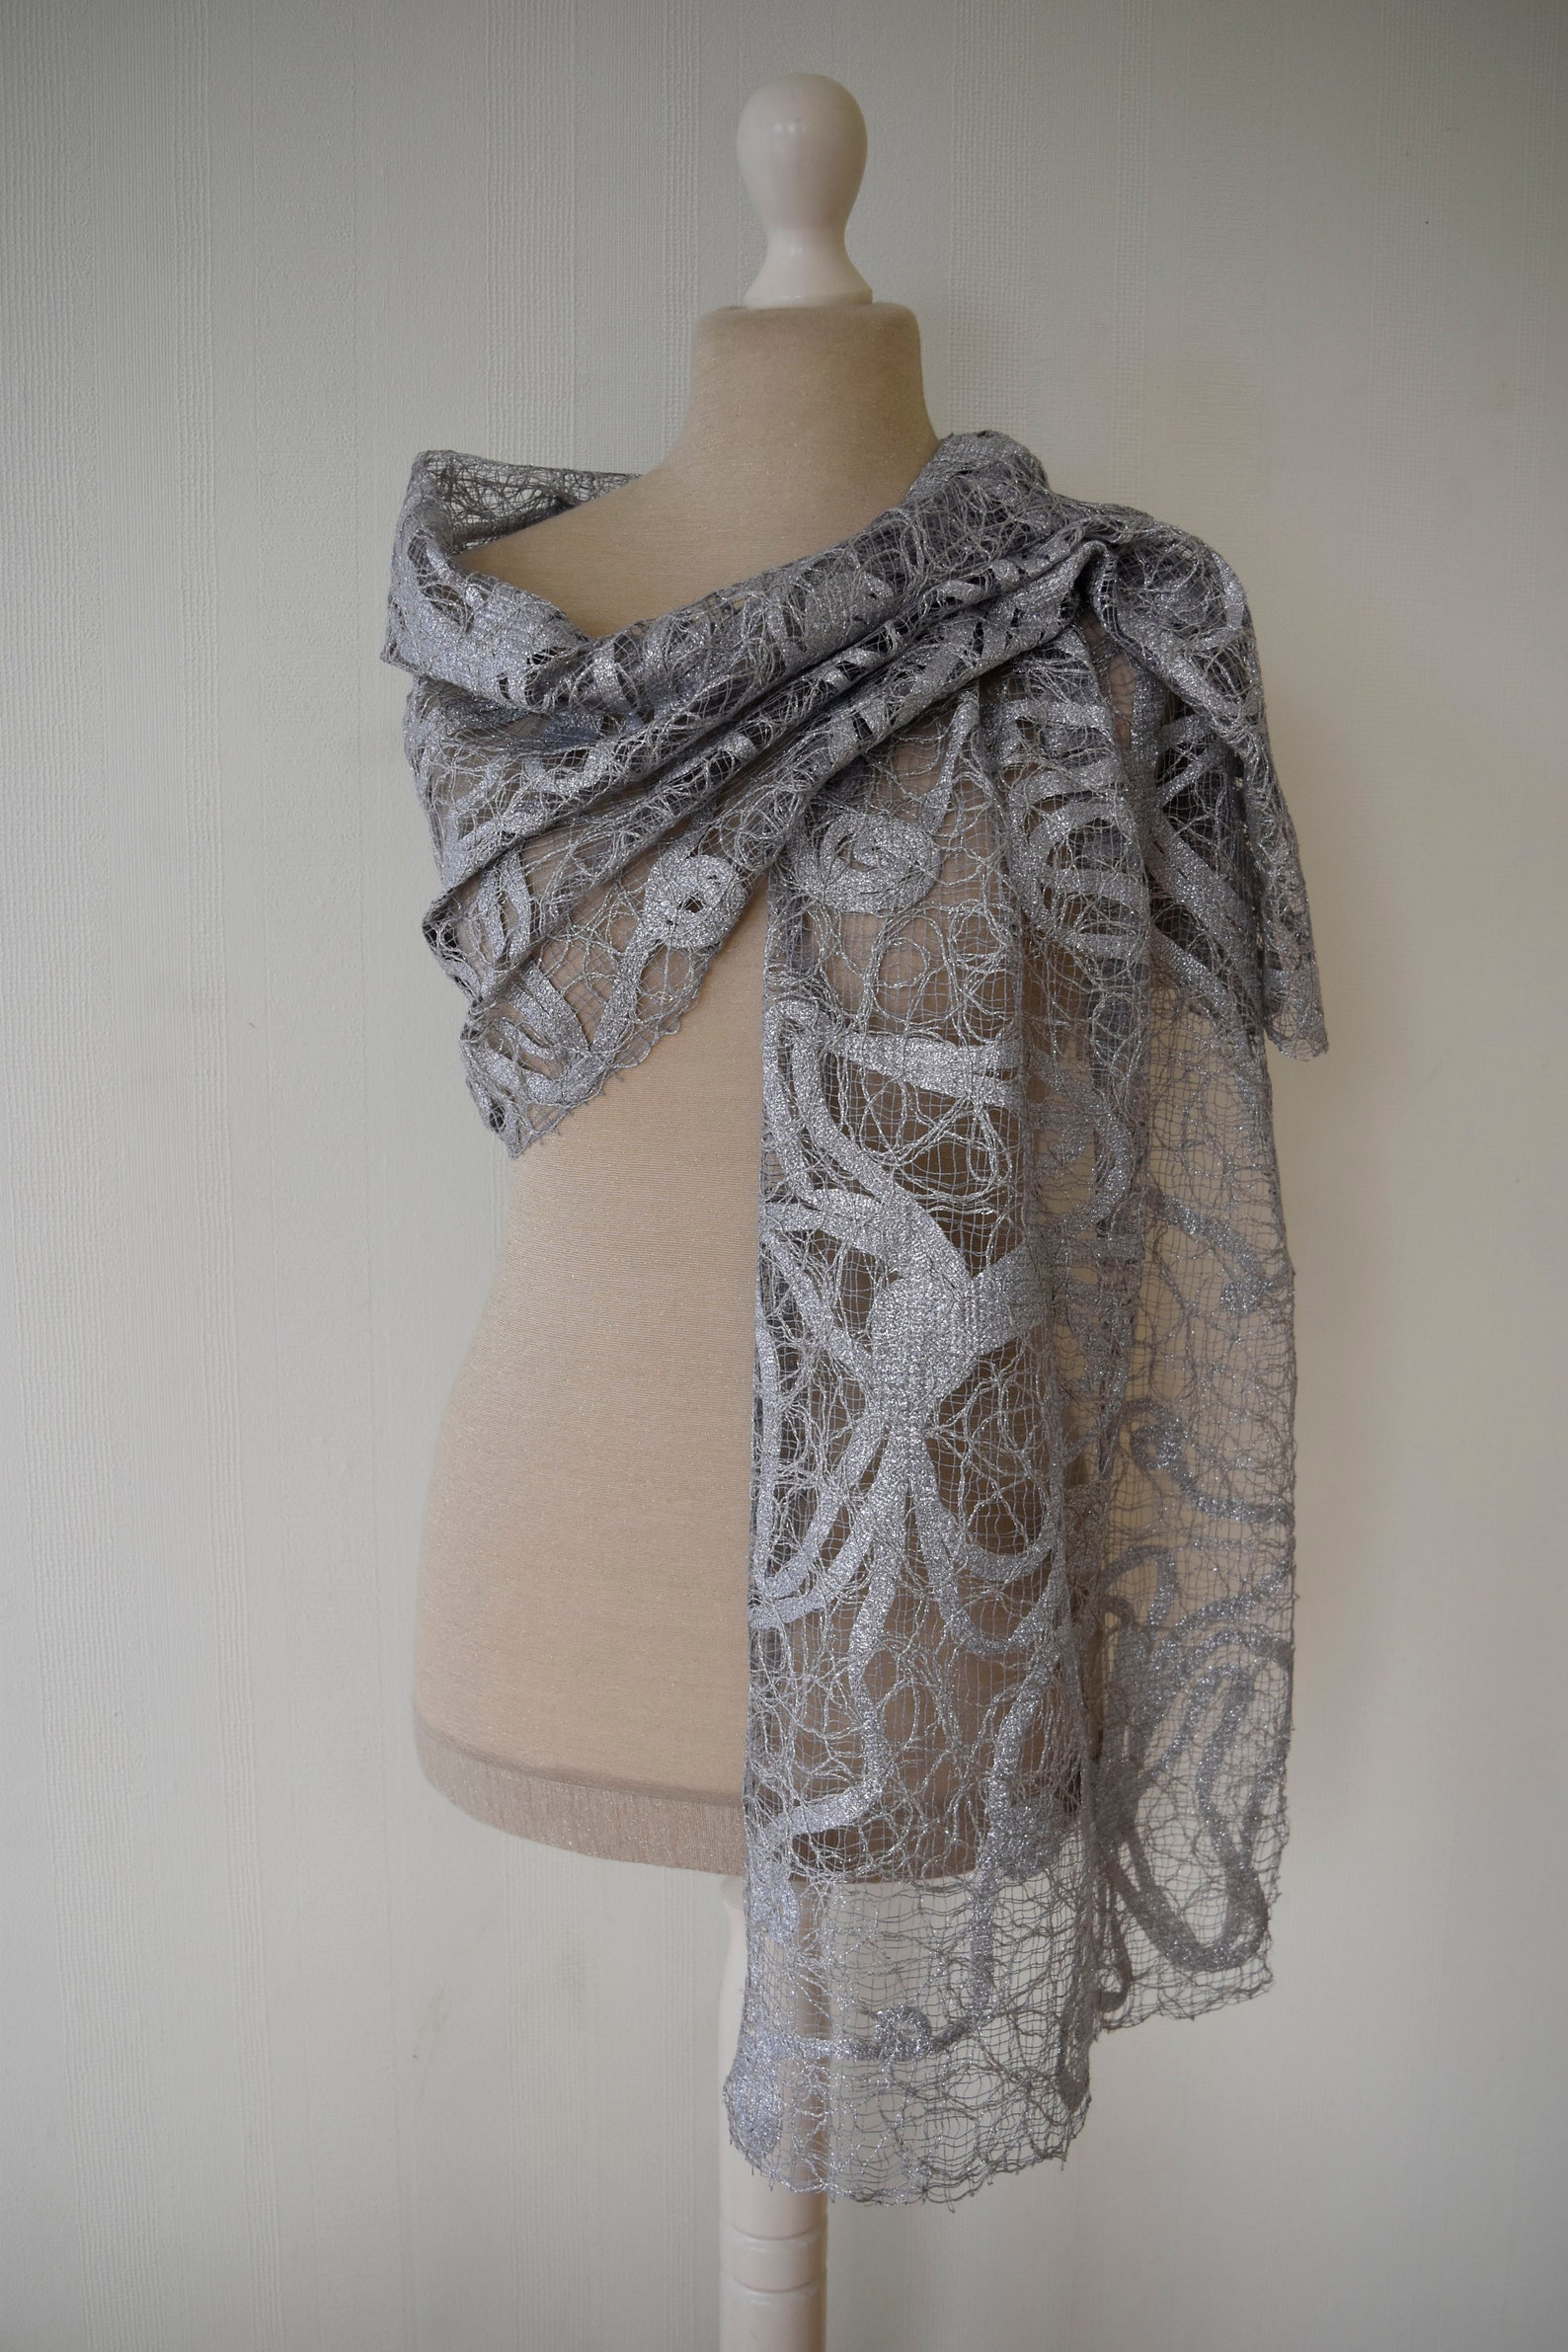 Lace shawl silver-gray color handmade | Etsy